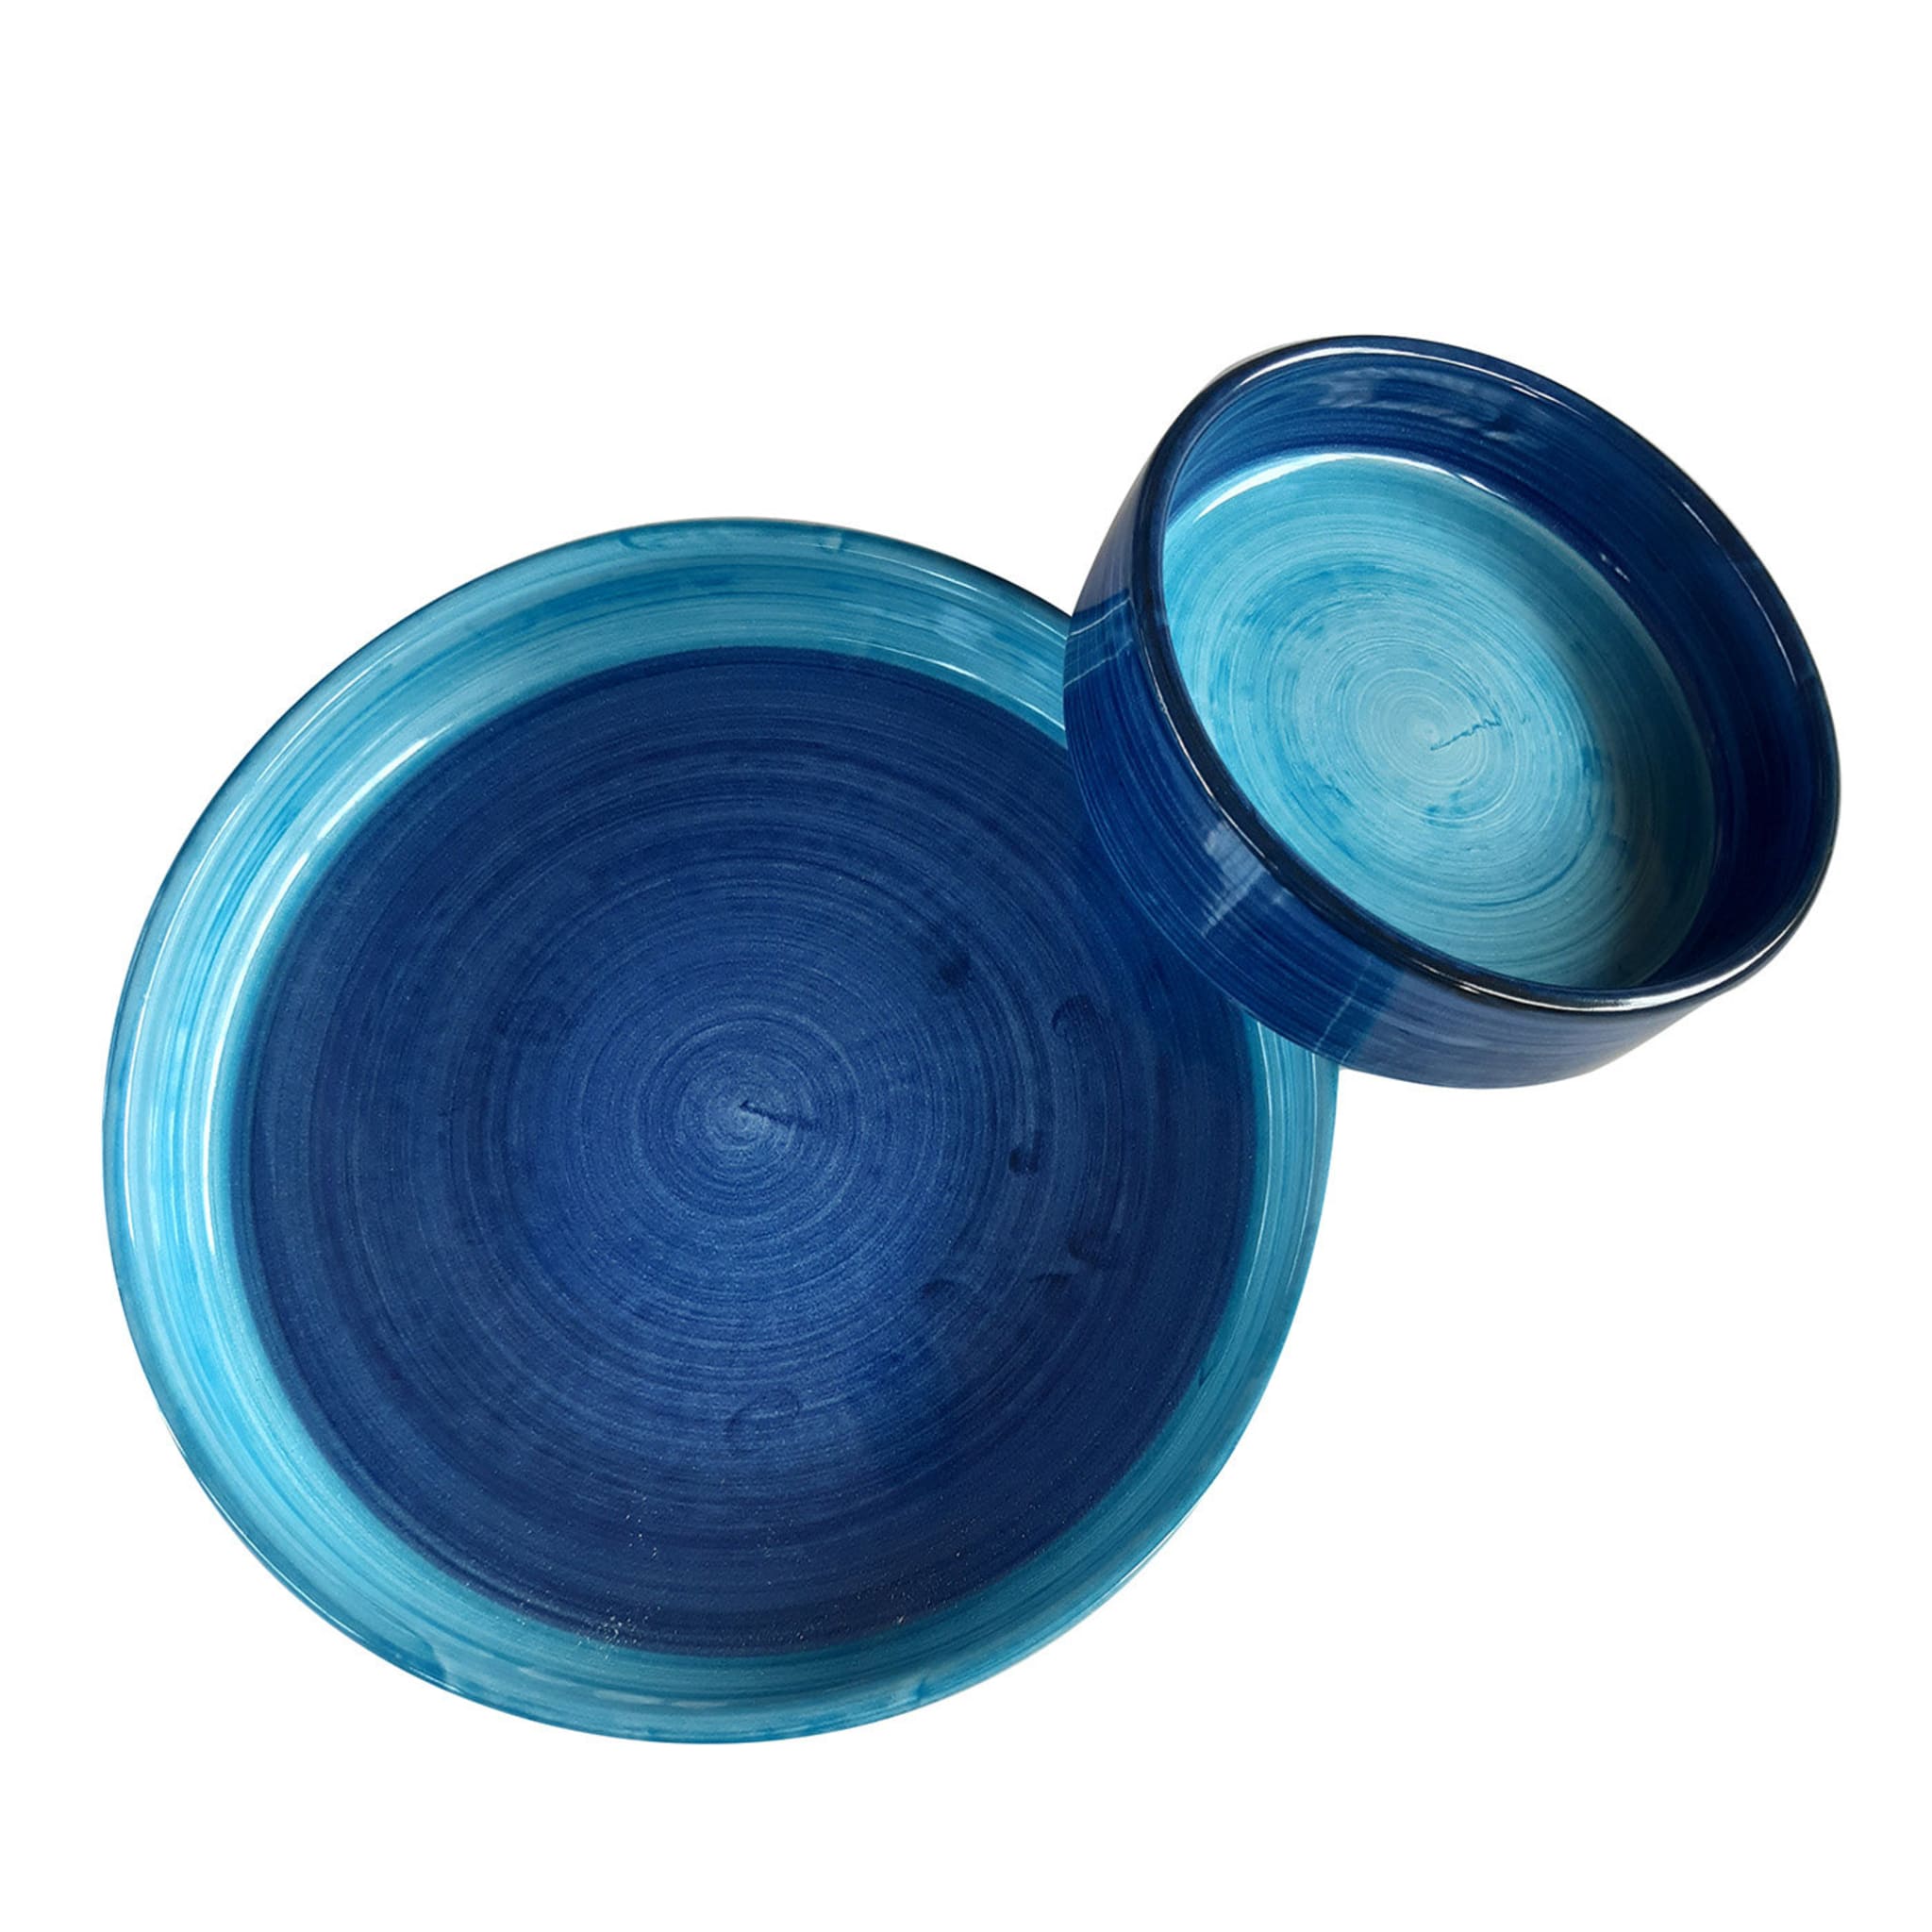 Coccio Set of 2 Blue Bowls - Main view